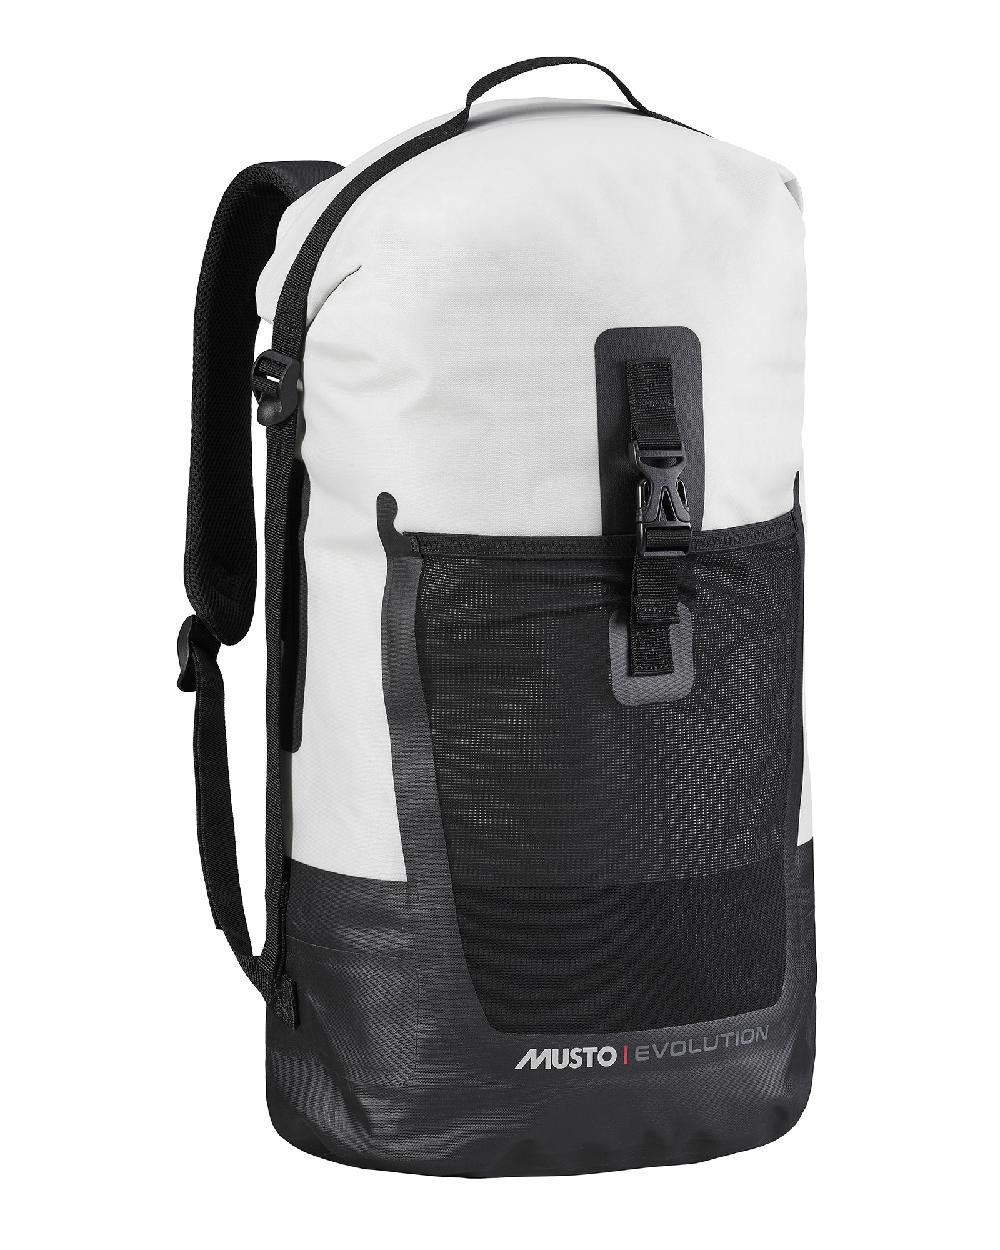 Platinum coloured Musto Evolution 40L Dry Backpack on white background 